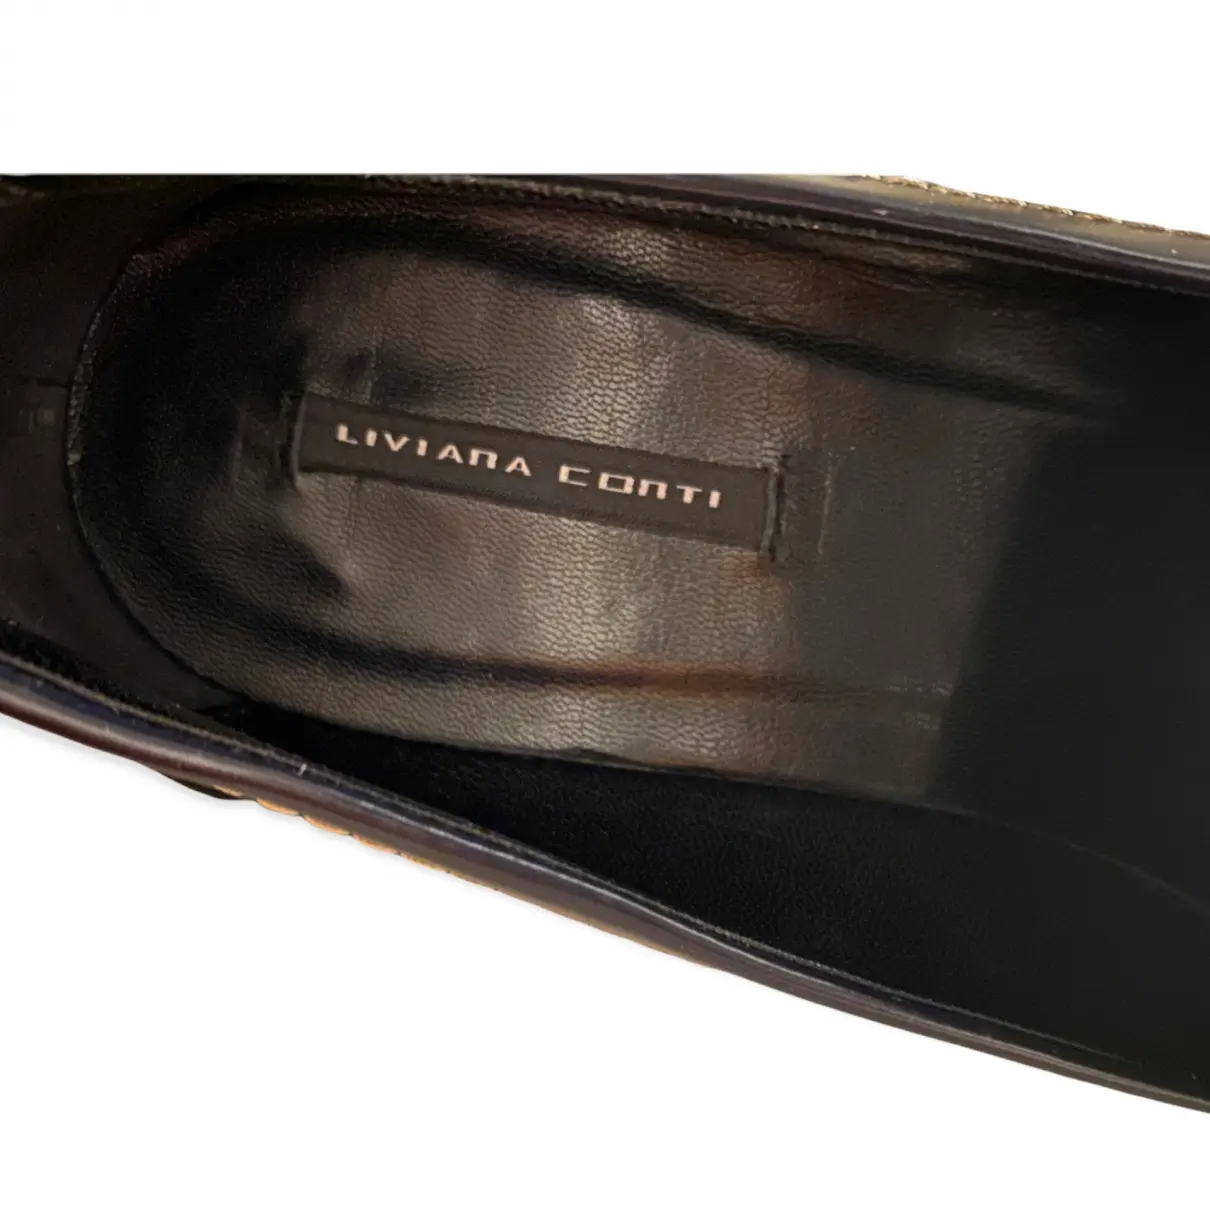 Leather flats Liviana Conti